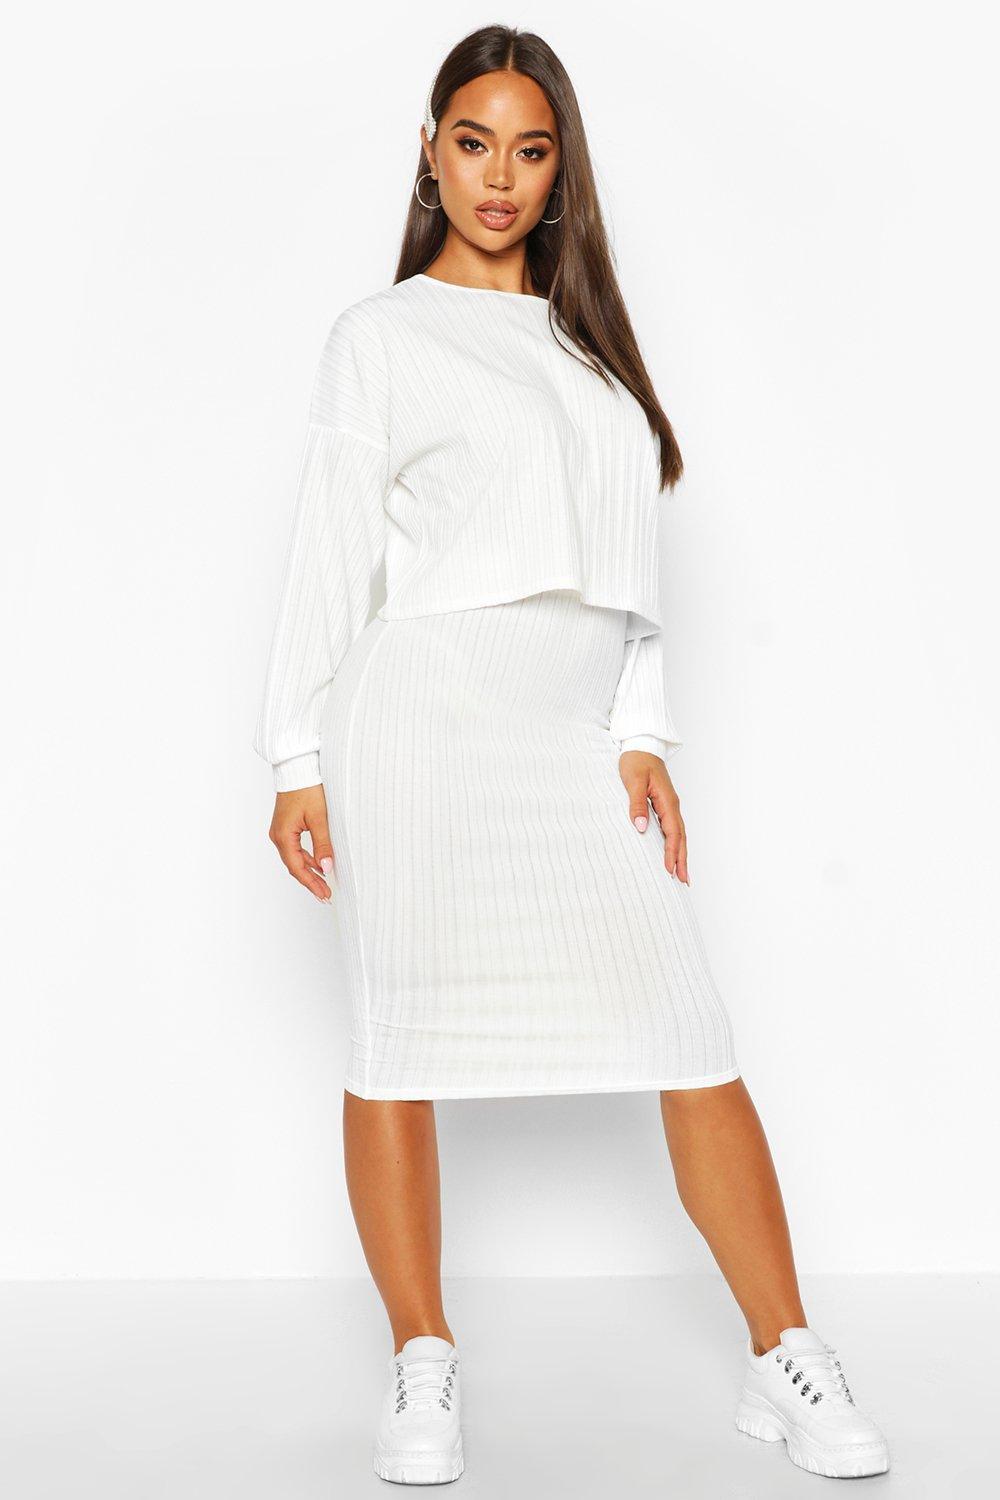 white midi skirt and top set